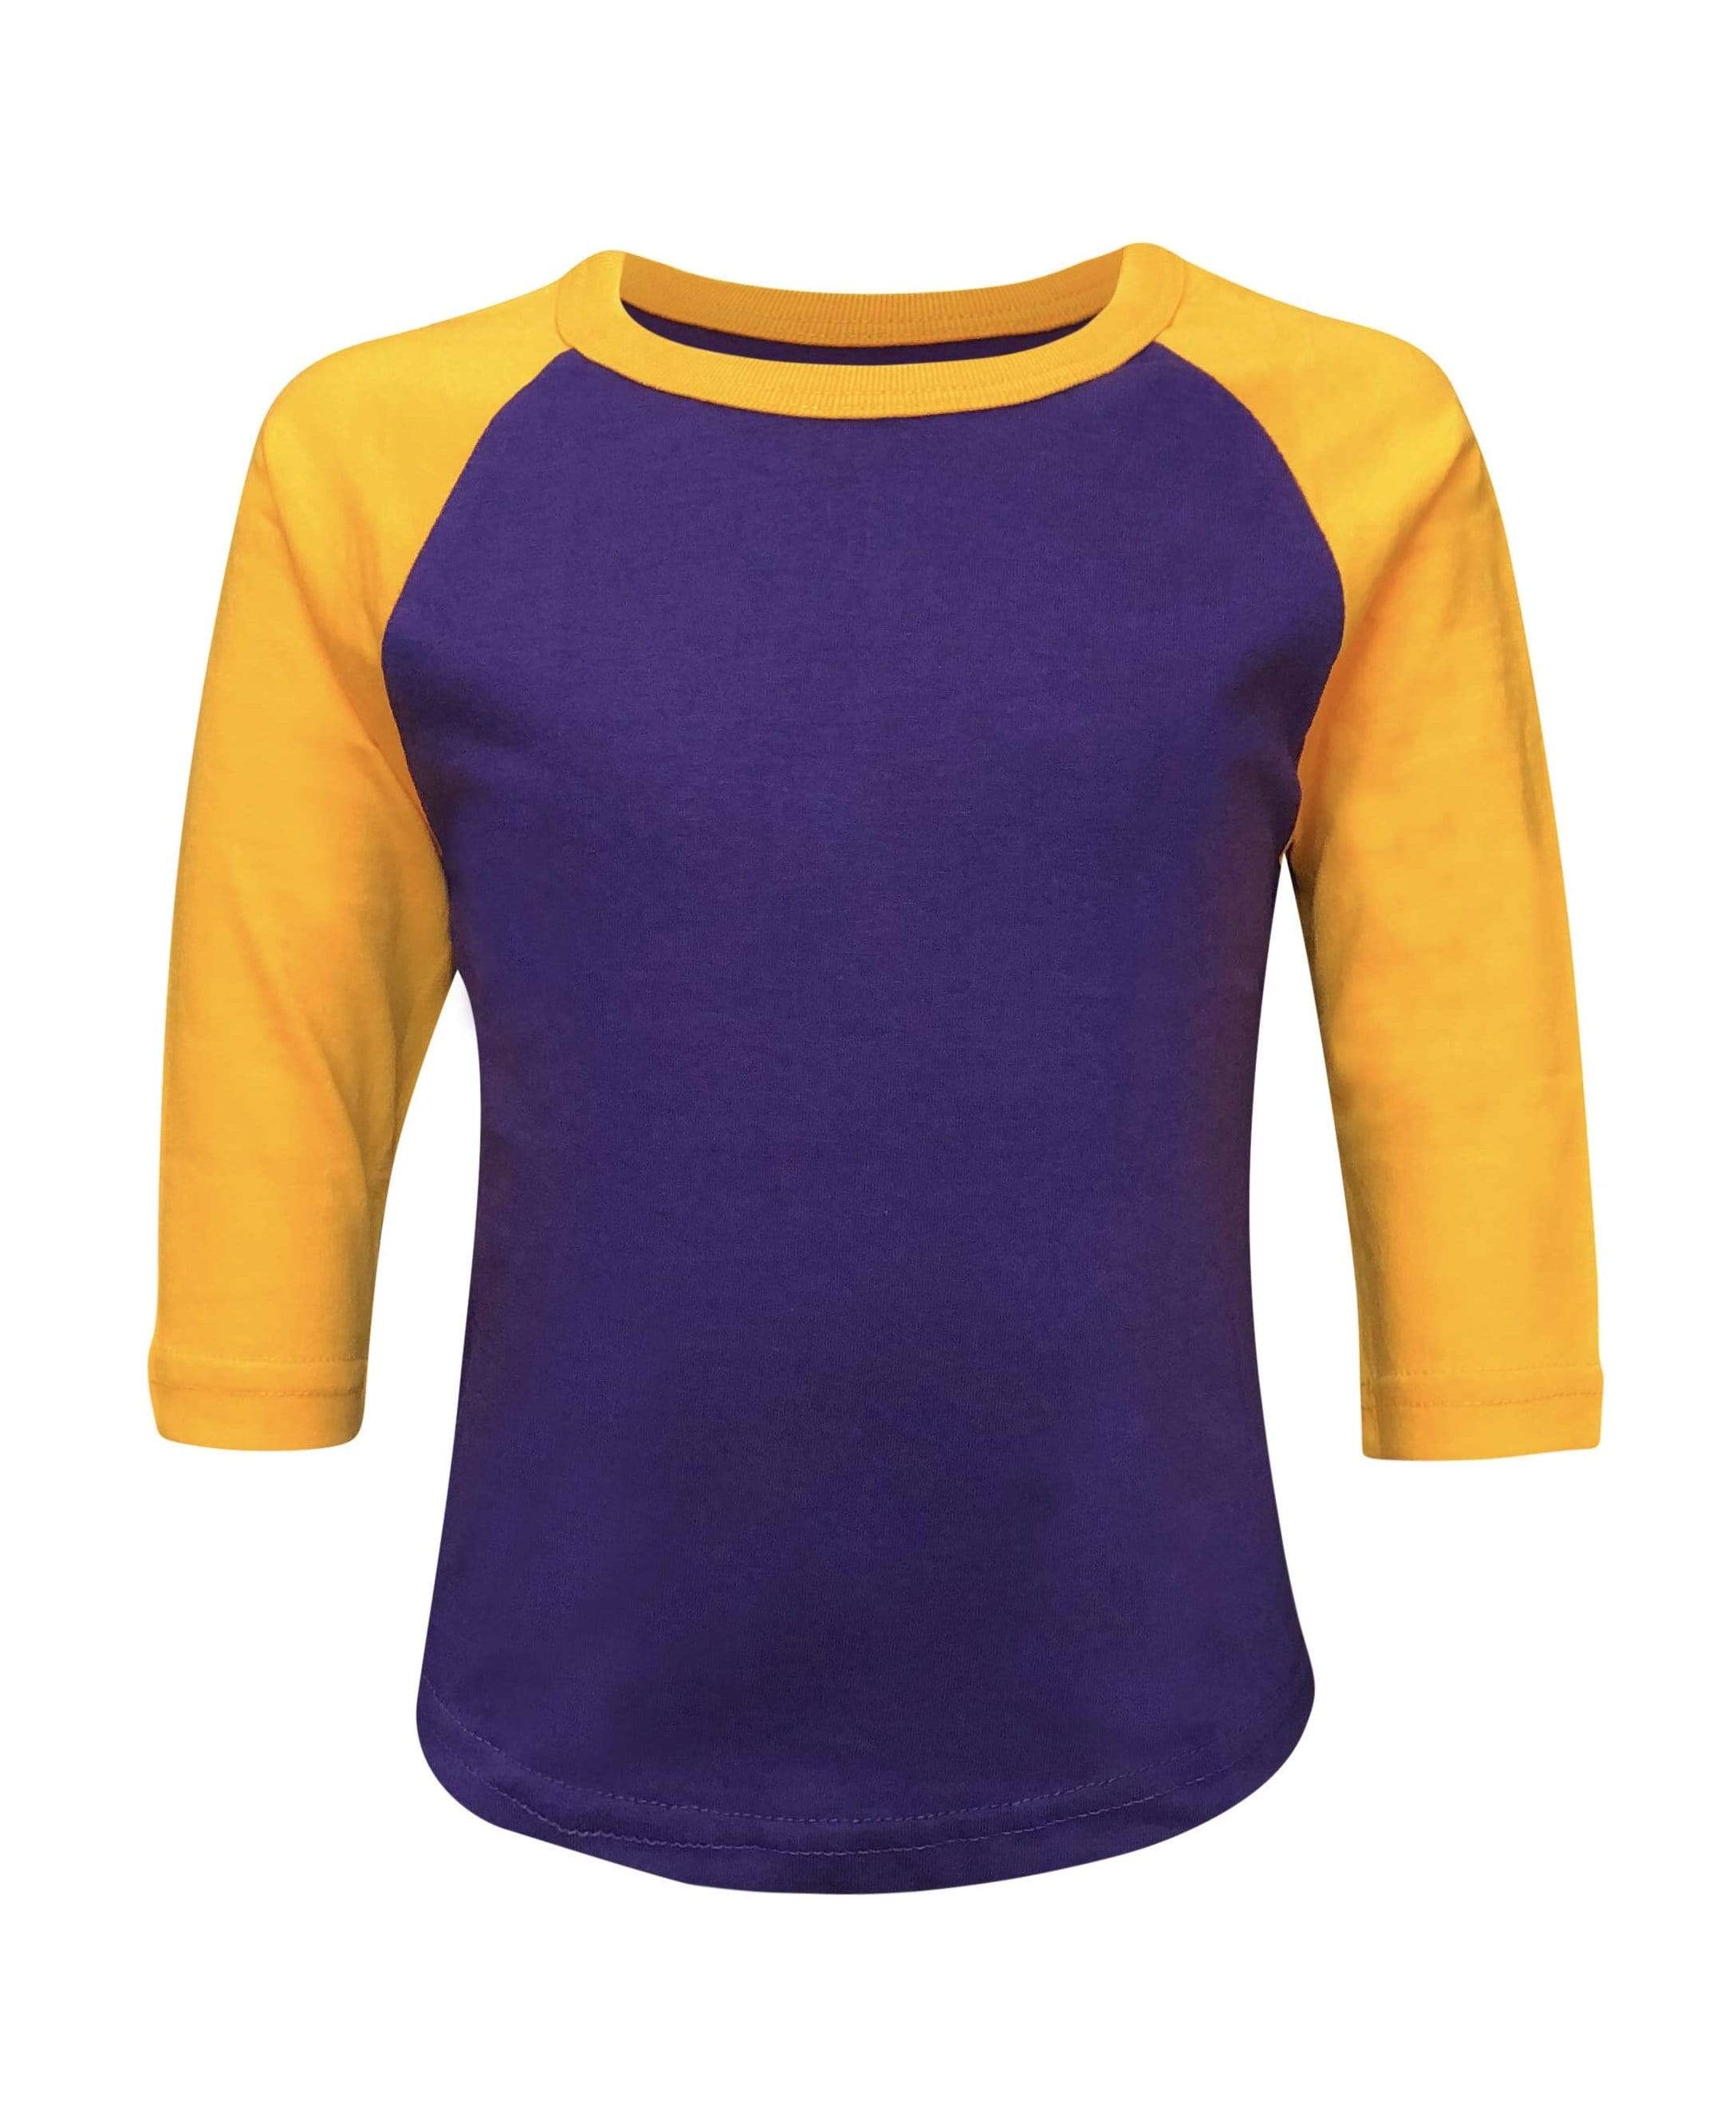 purple and gold raglan shirt